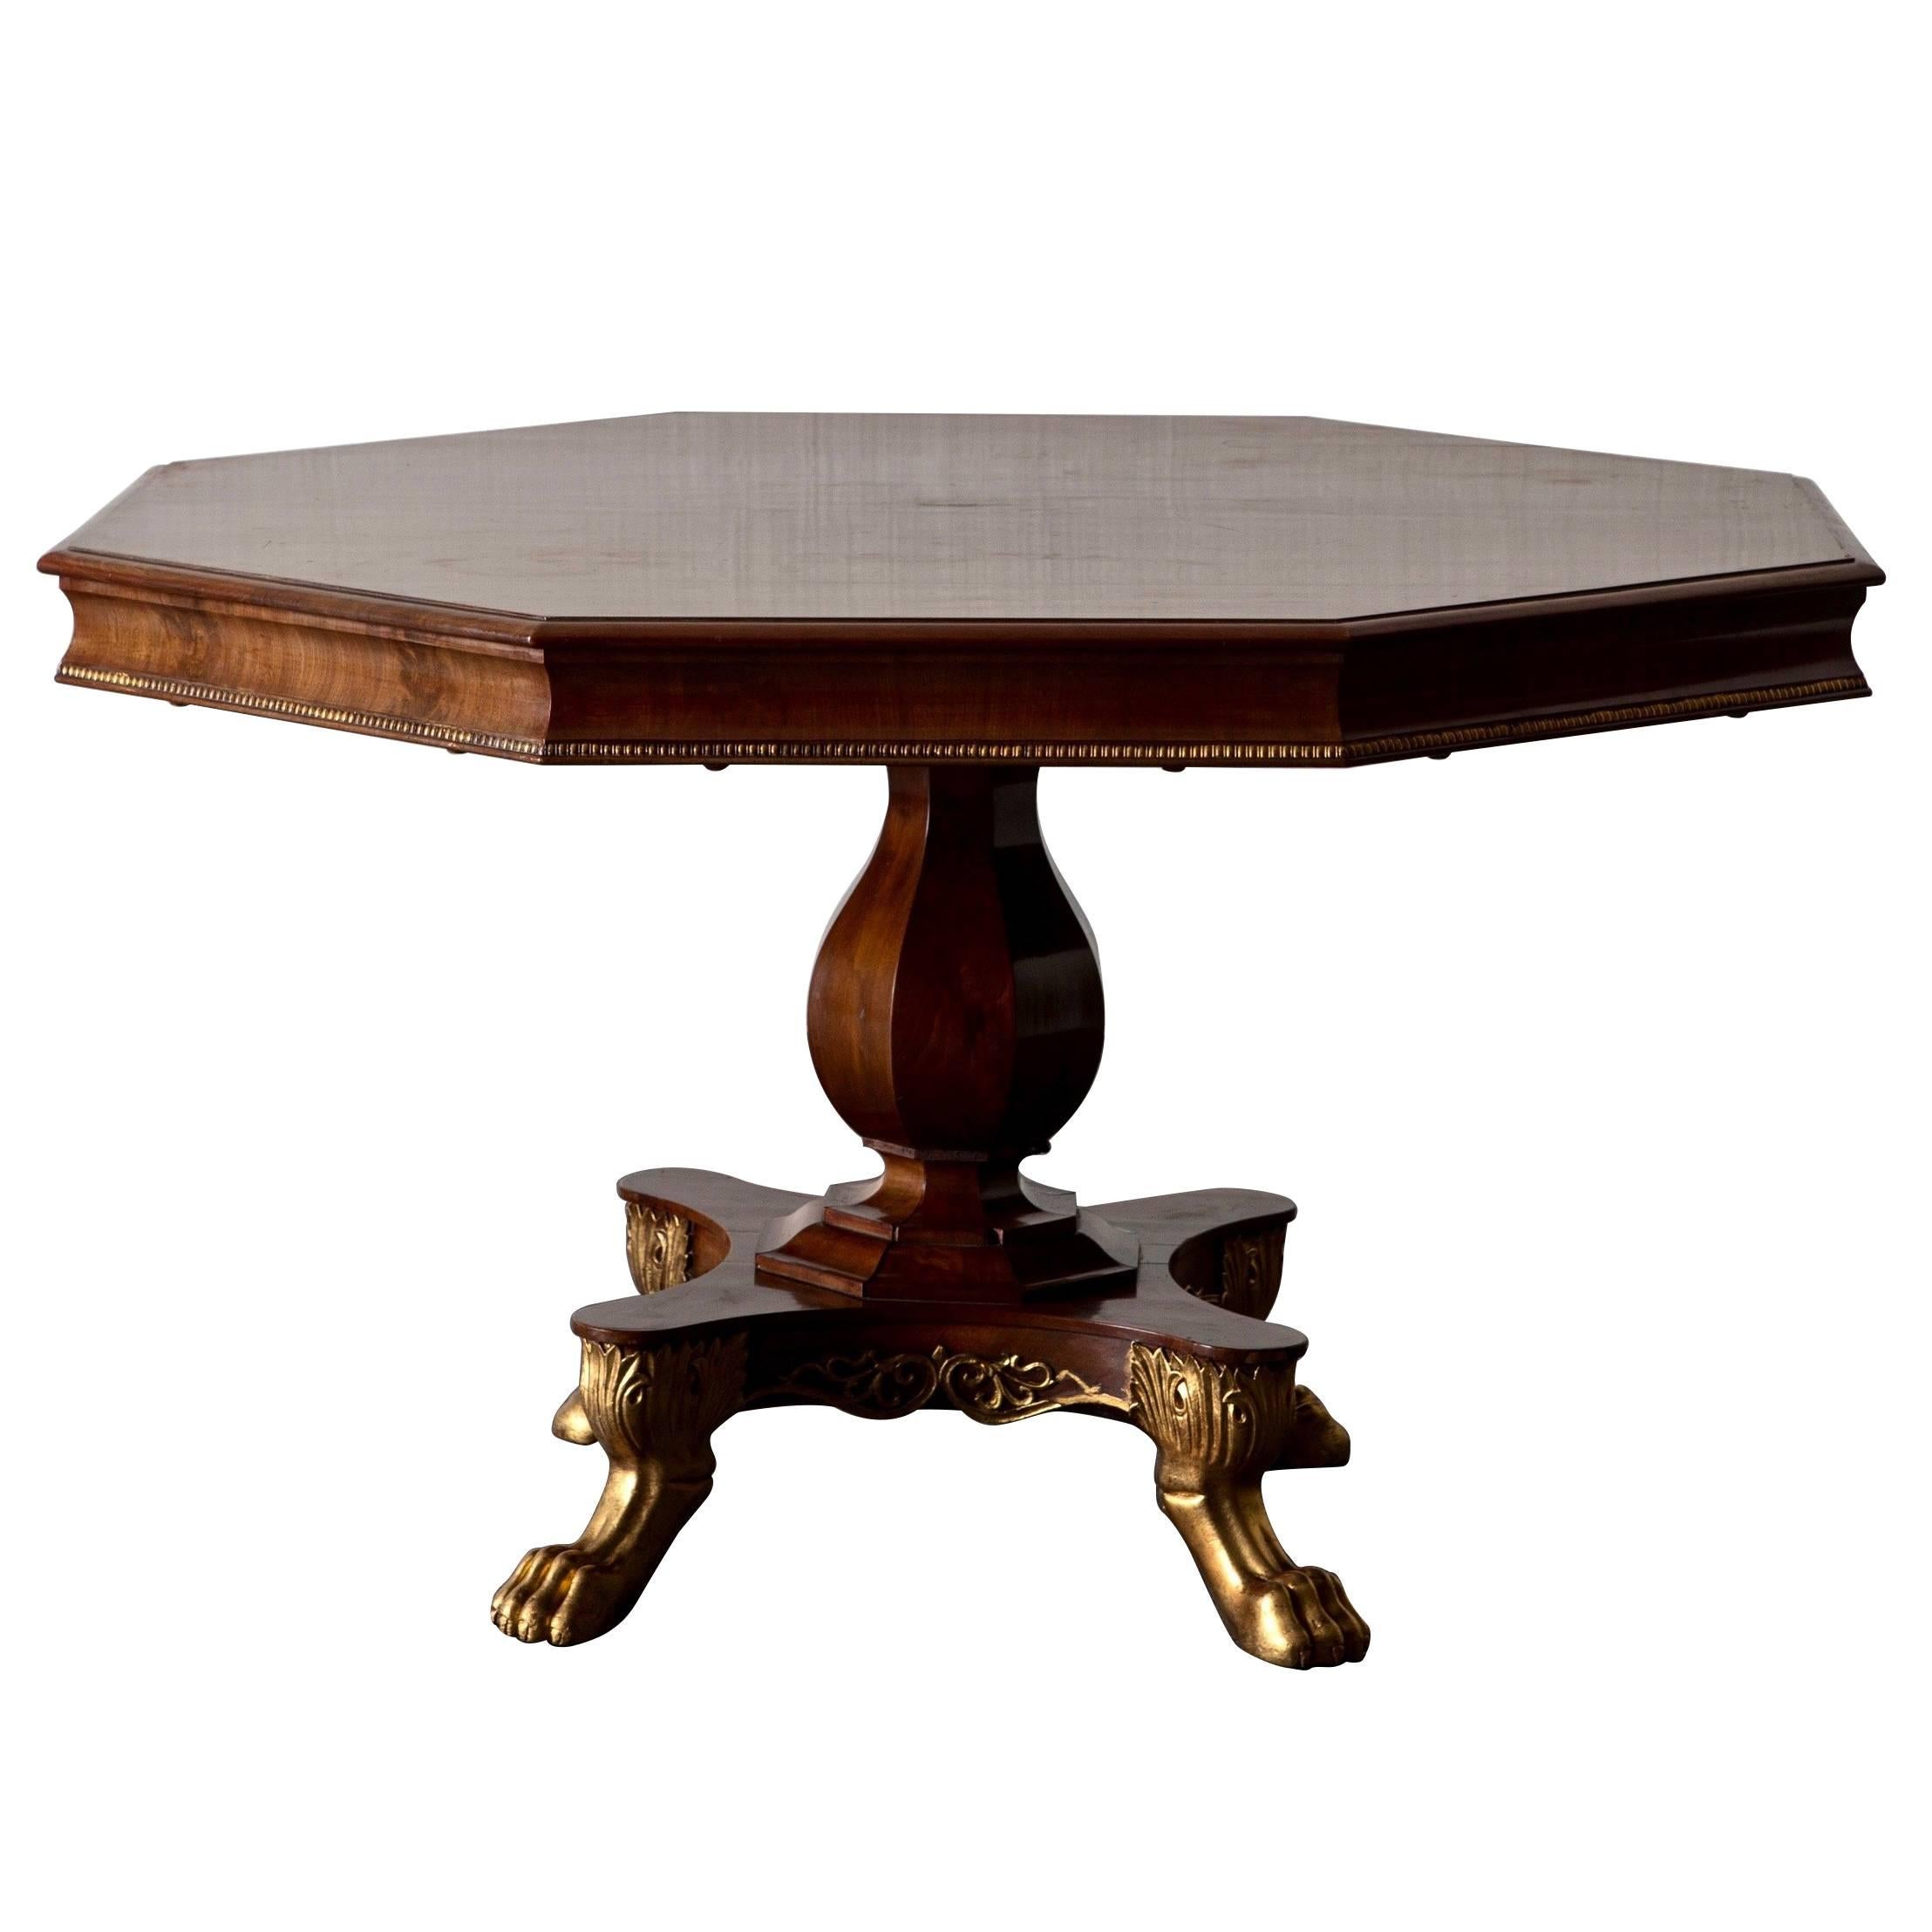 Centre Table Walnut Gilded Details English 19th century Regency England